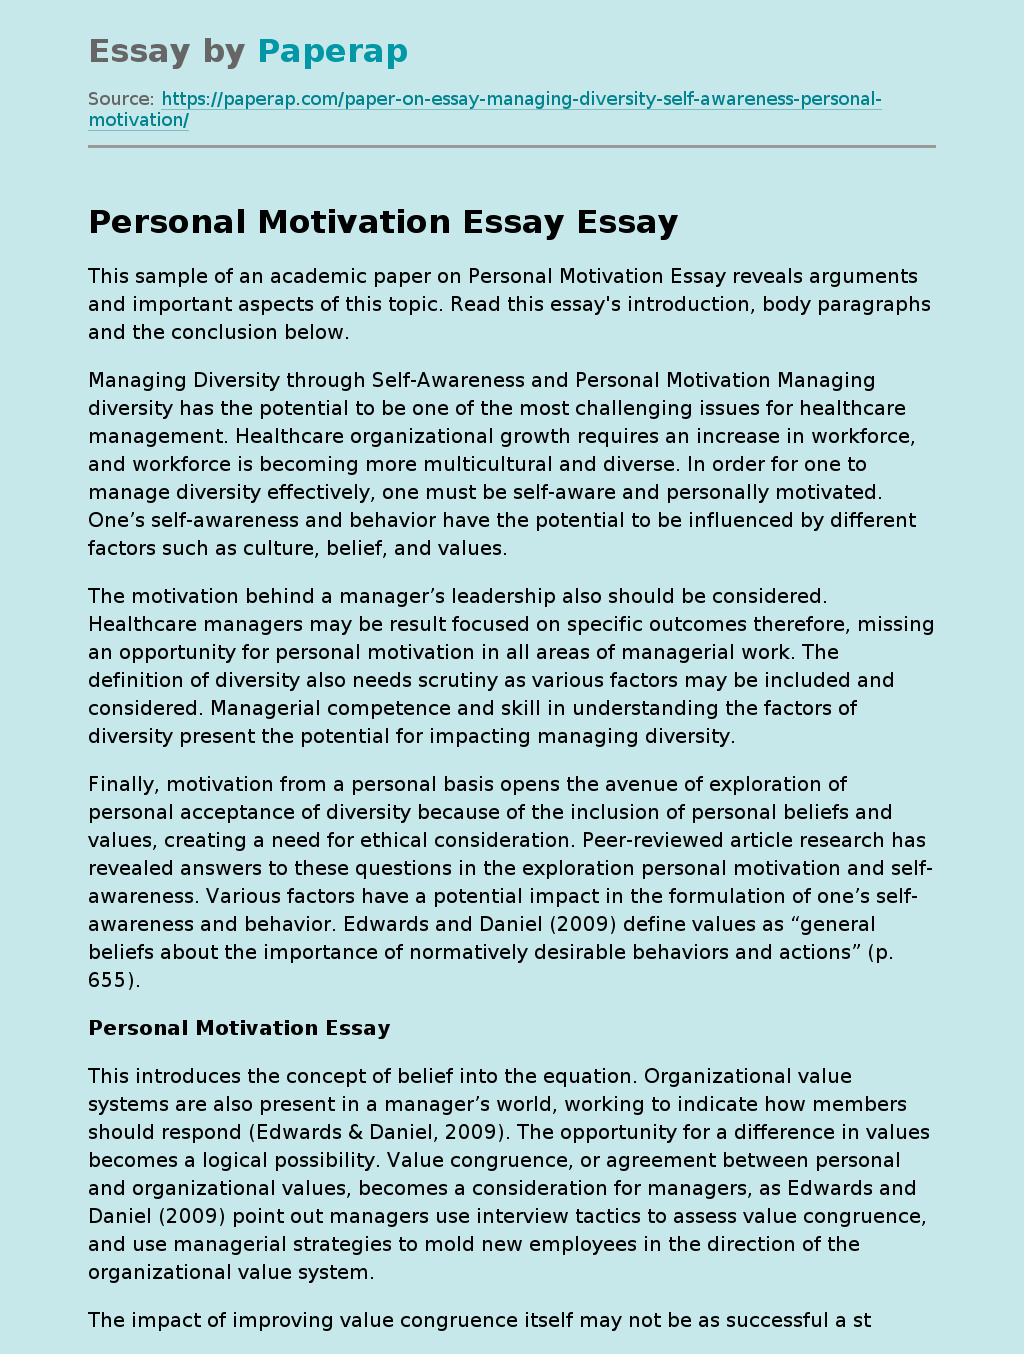 Personal Motivation Essay